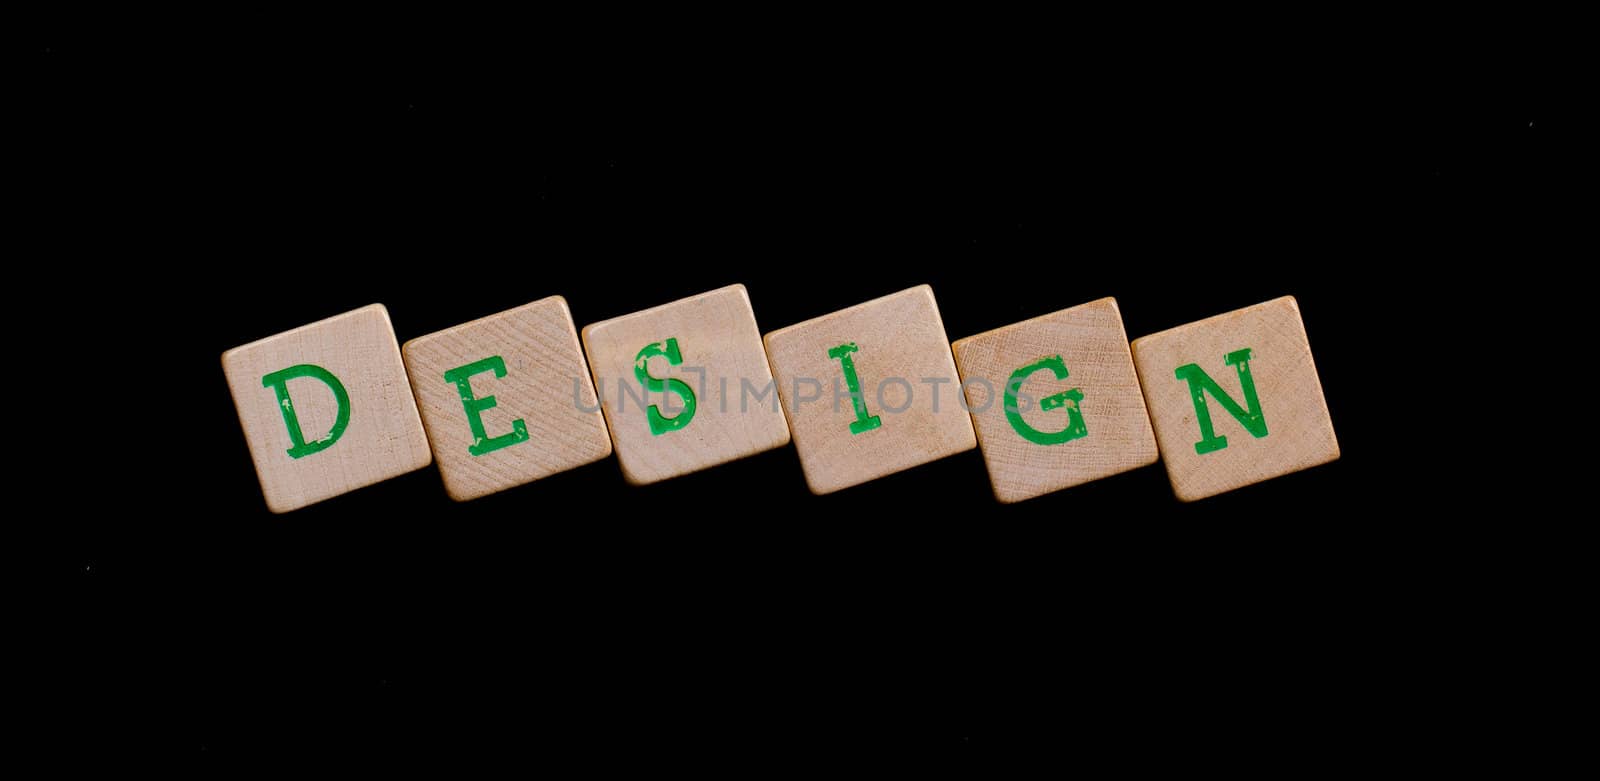 Green letters on old wooden blocks (design)